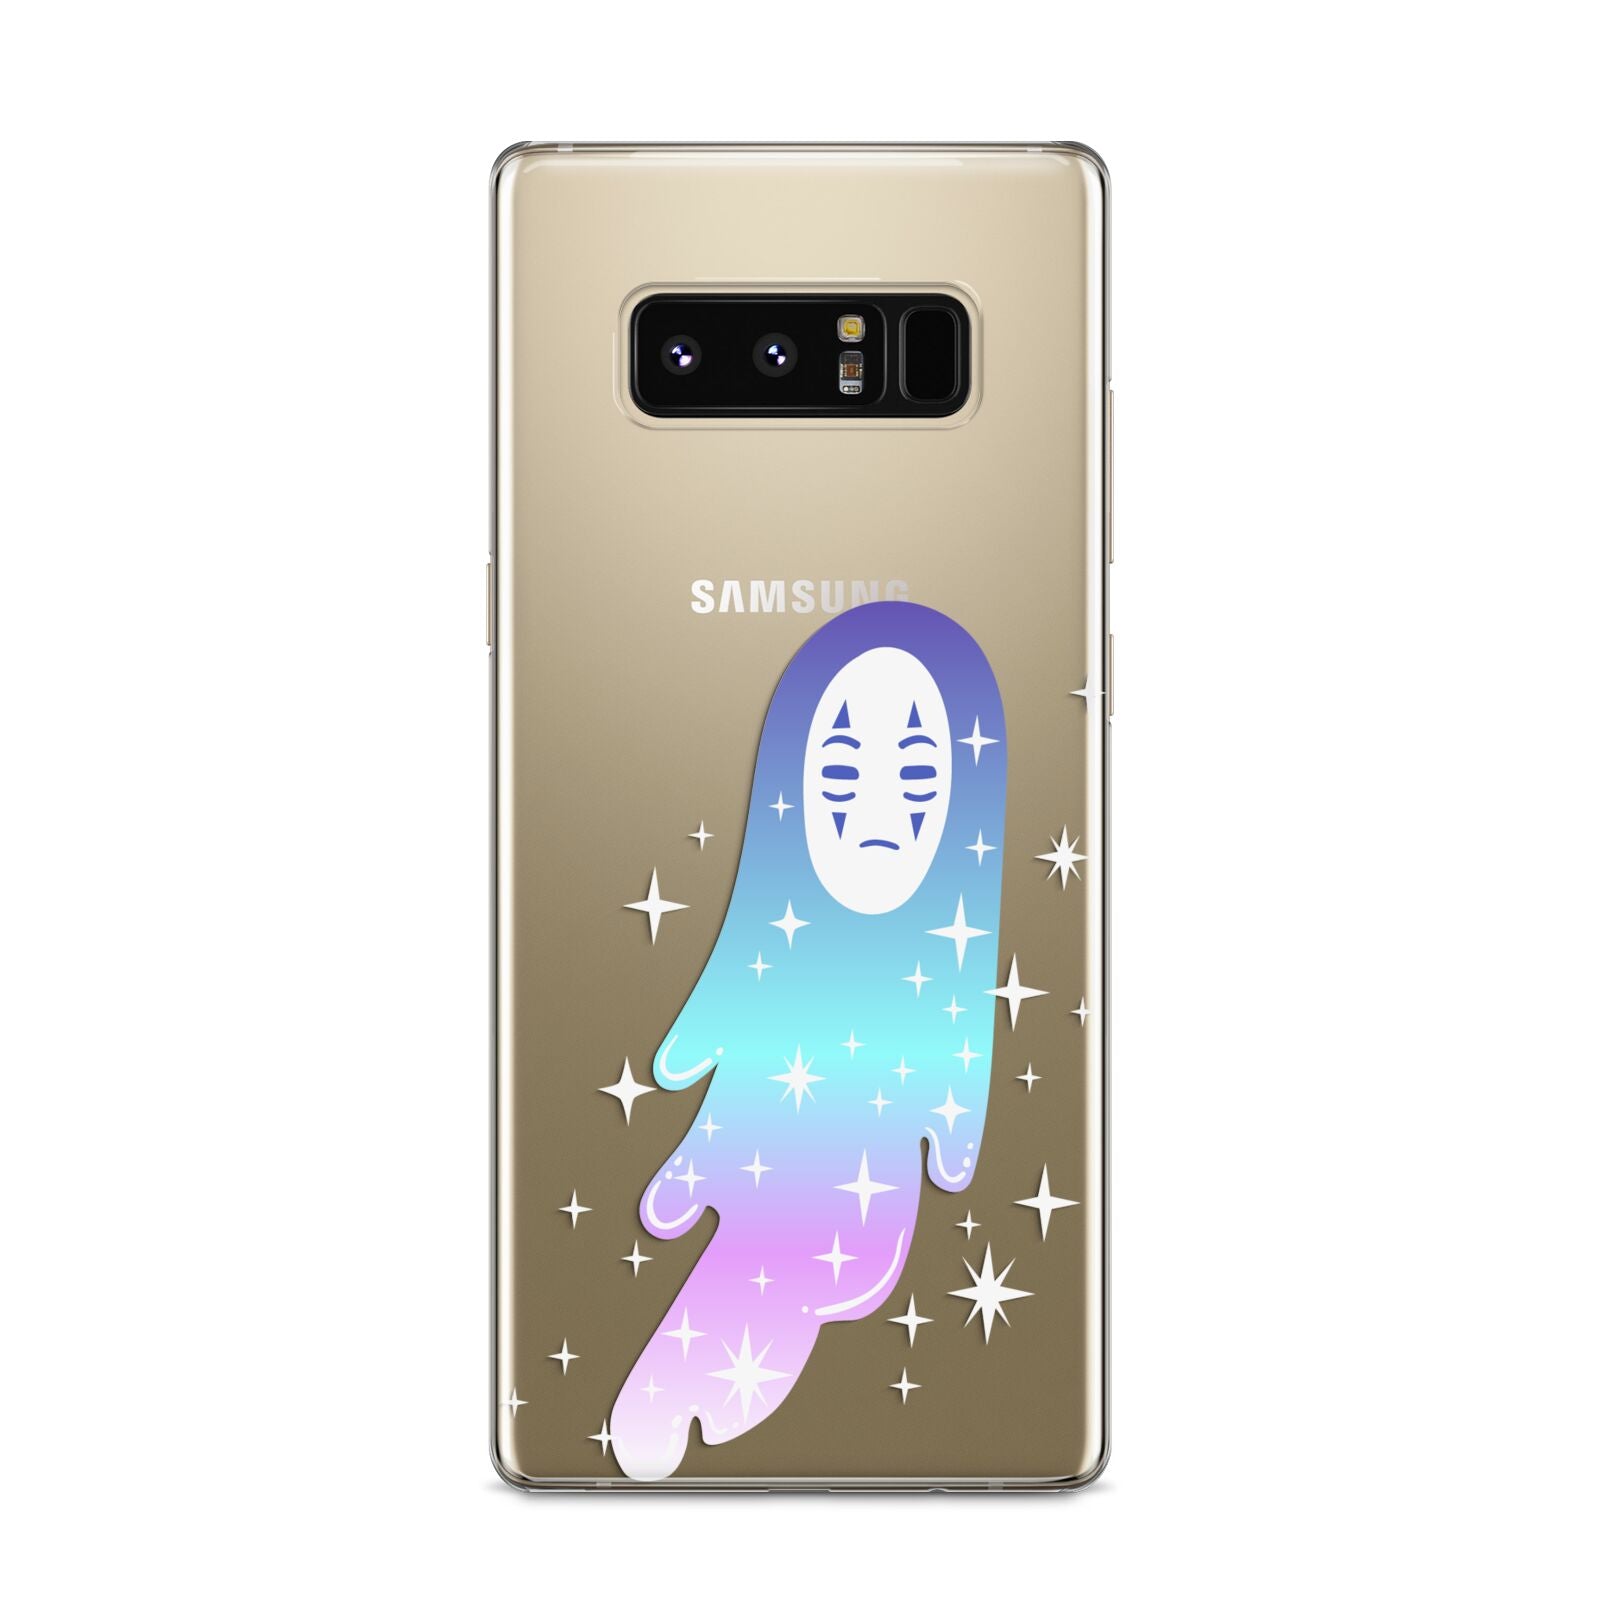 Starry Spectre Samsung Galaxy S8 Case